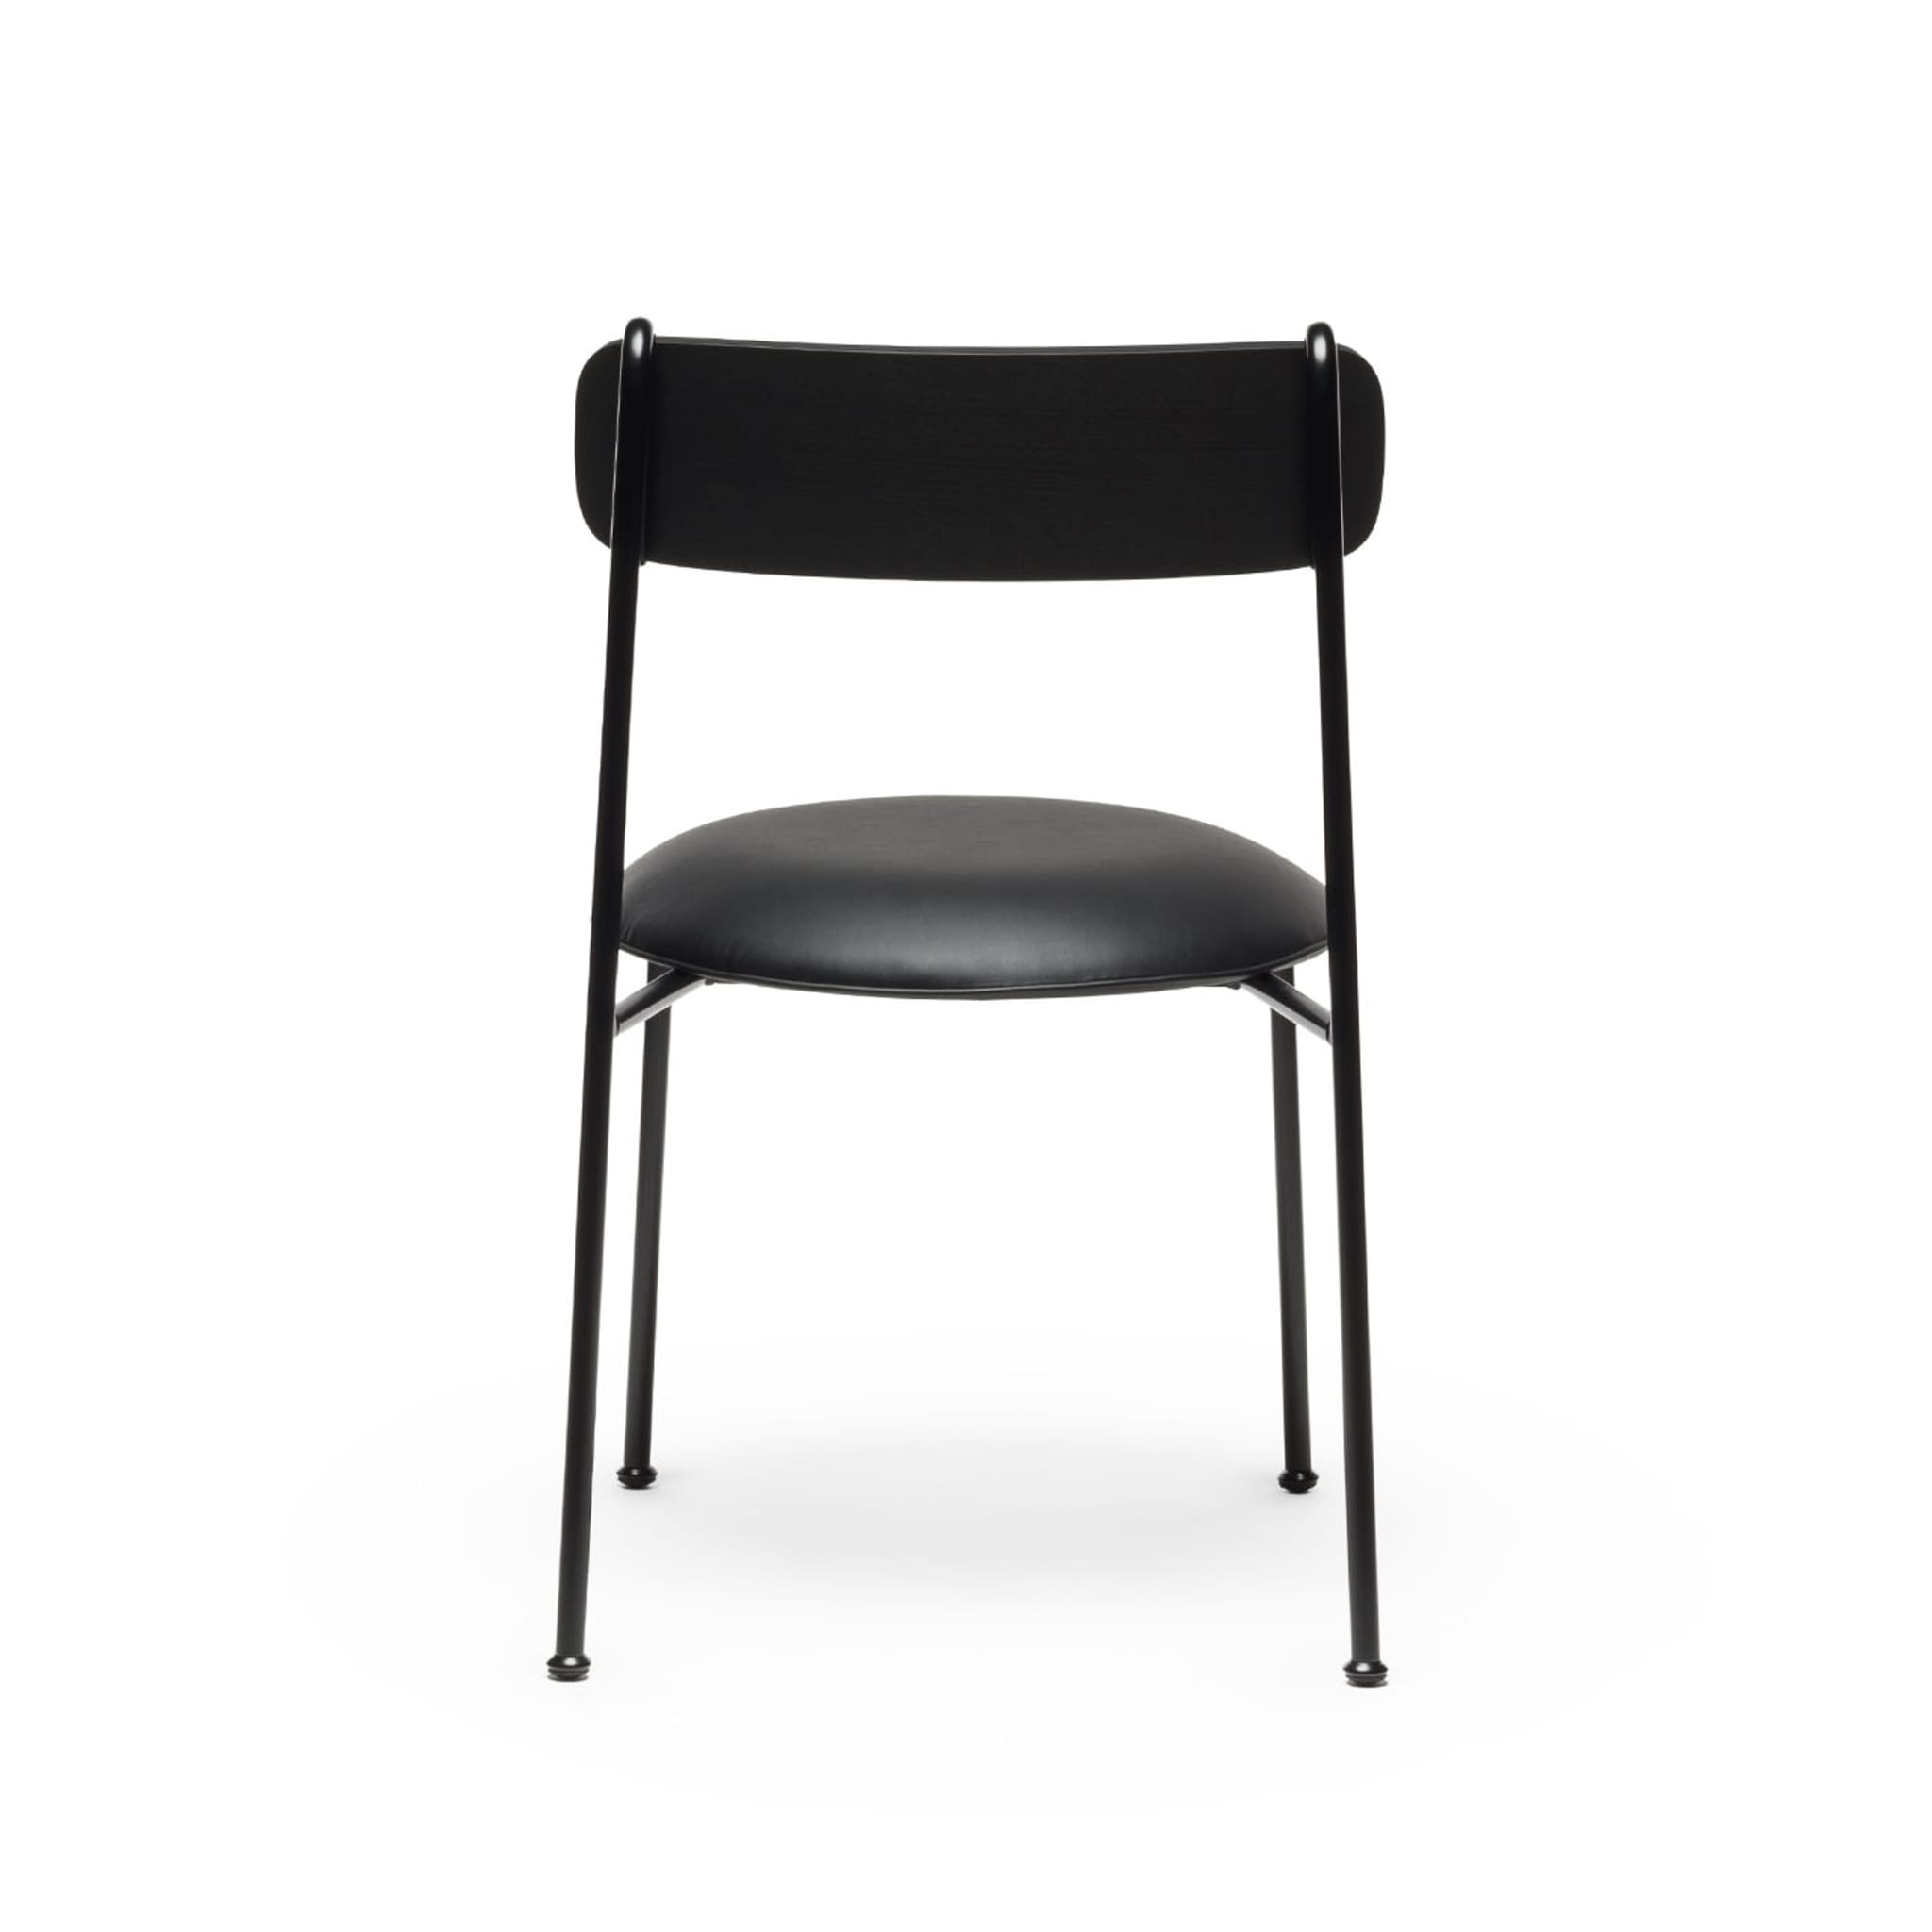 Lena S Black Chair By Designerd - Alternative view 5